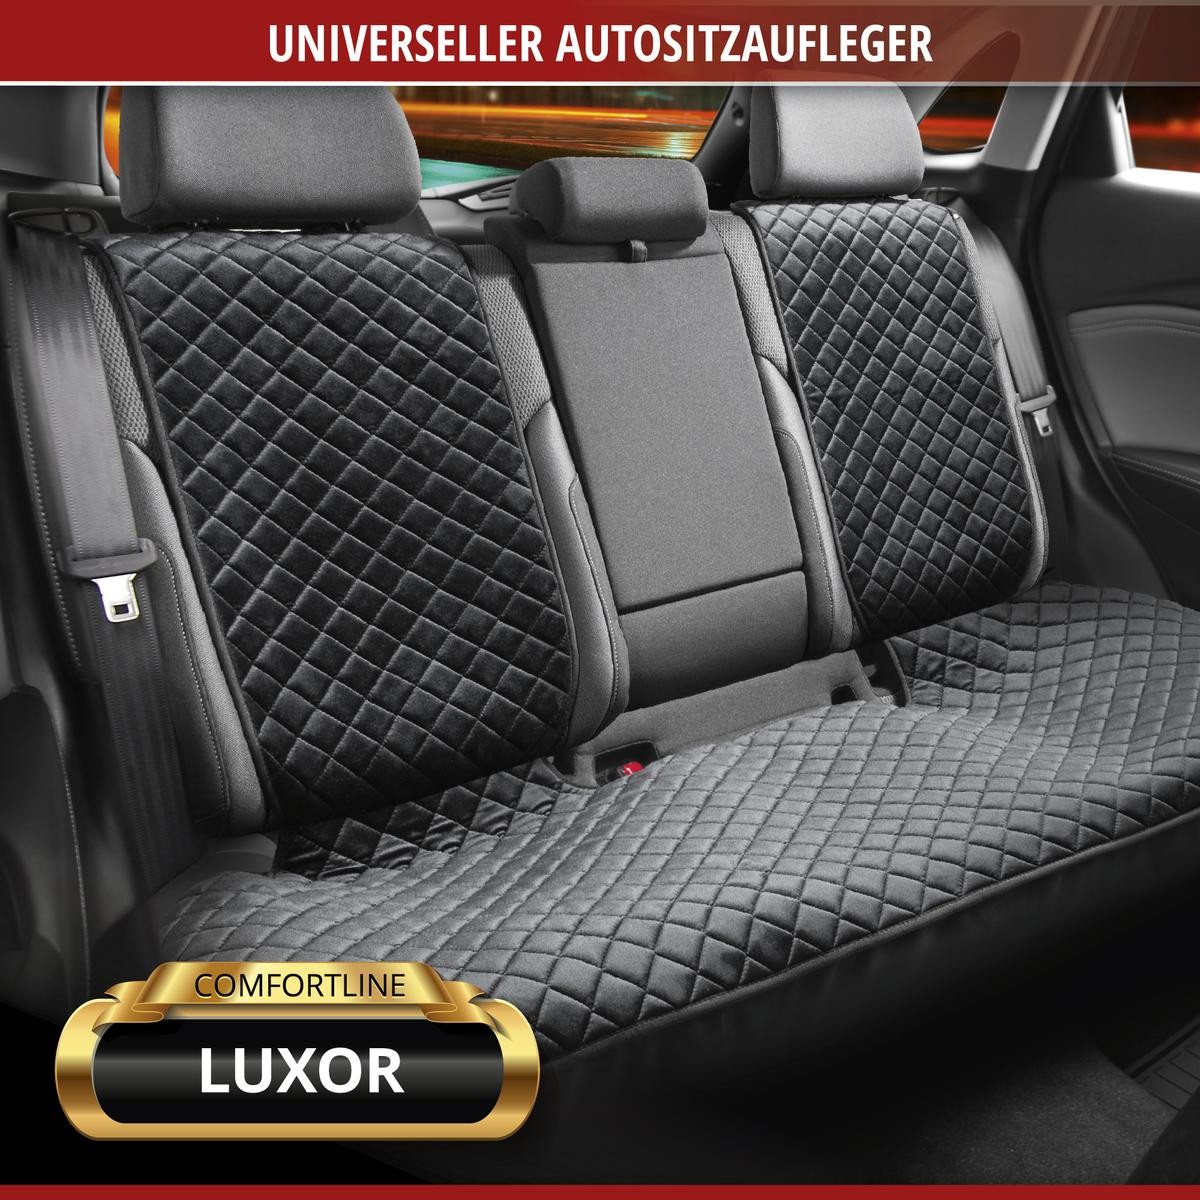 13959 WALSER Comfortline Luxor Autositzbezug schwarz, Polyester